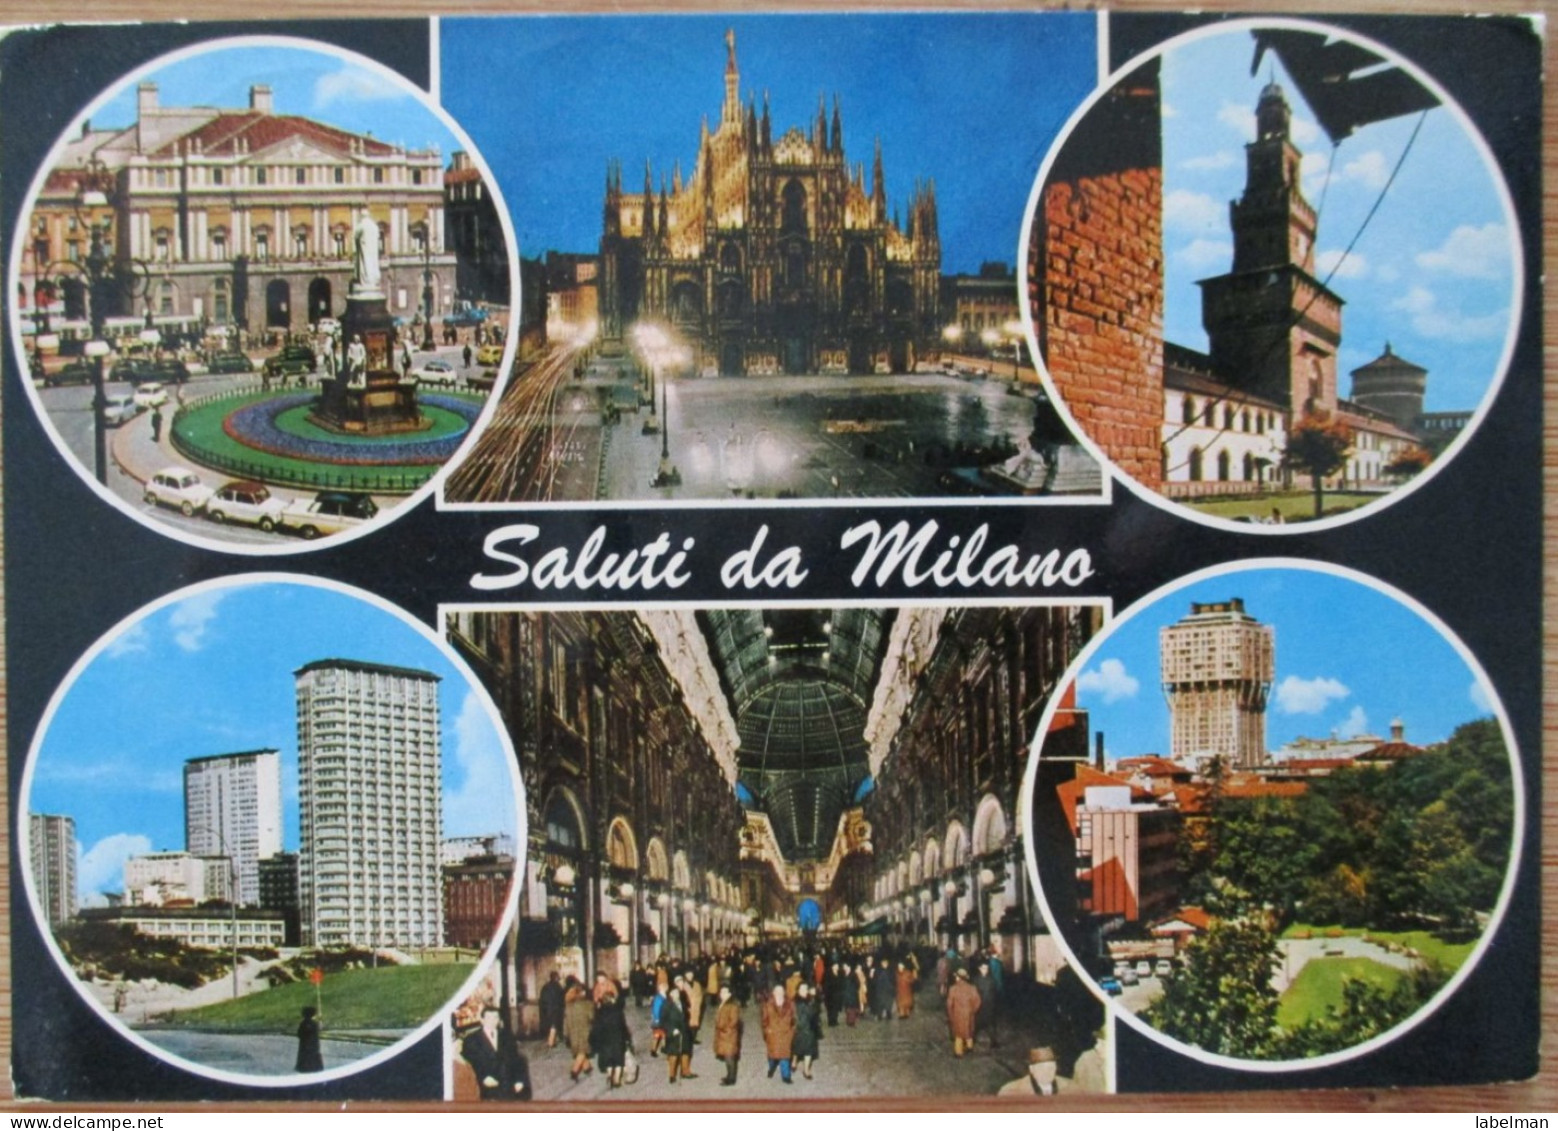 ITALIA ITALY MILANO MULTI VIEW PANORAMA POSTCARD CARTE POSTALE ANSICHTSKARTE CARTOLINA POSTKARTE CARD - Napoli (Napels)